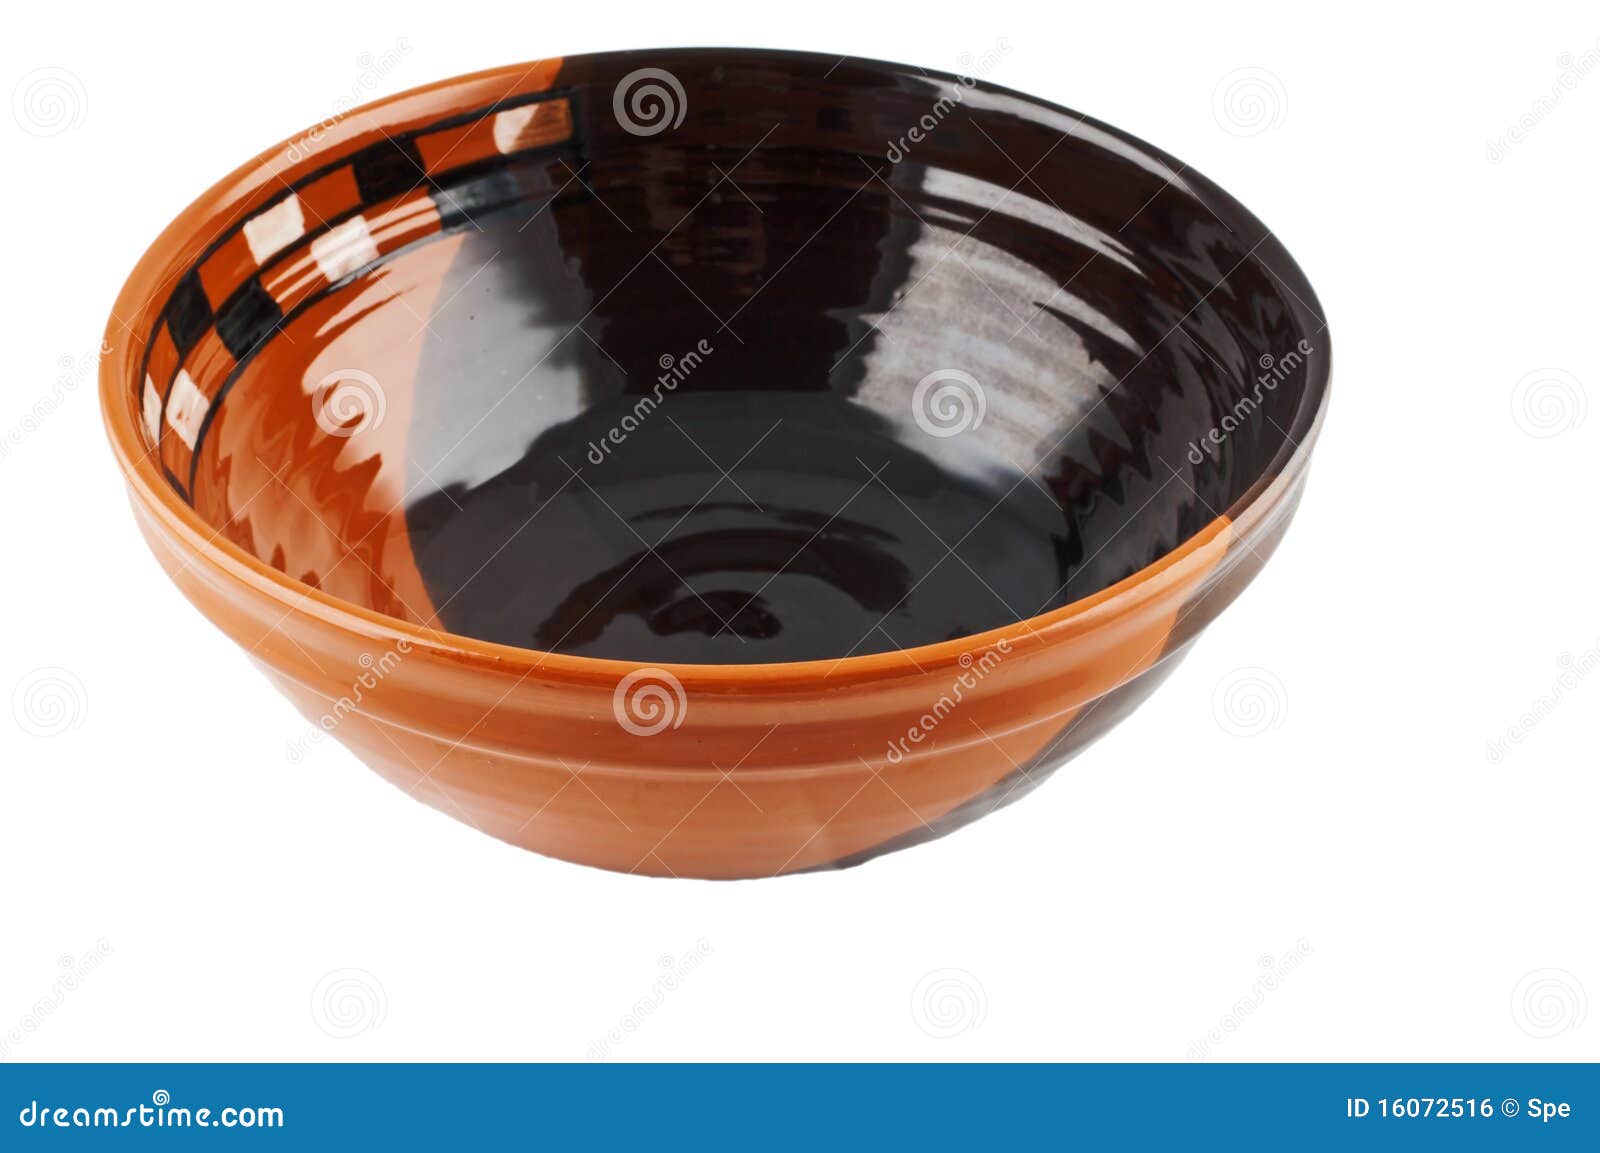 handcrafted ceramic bowl